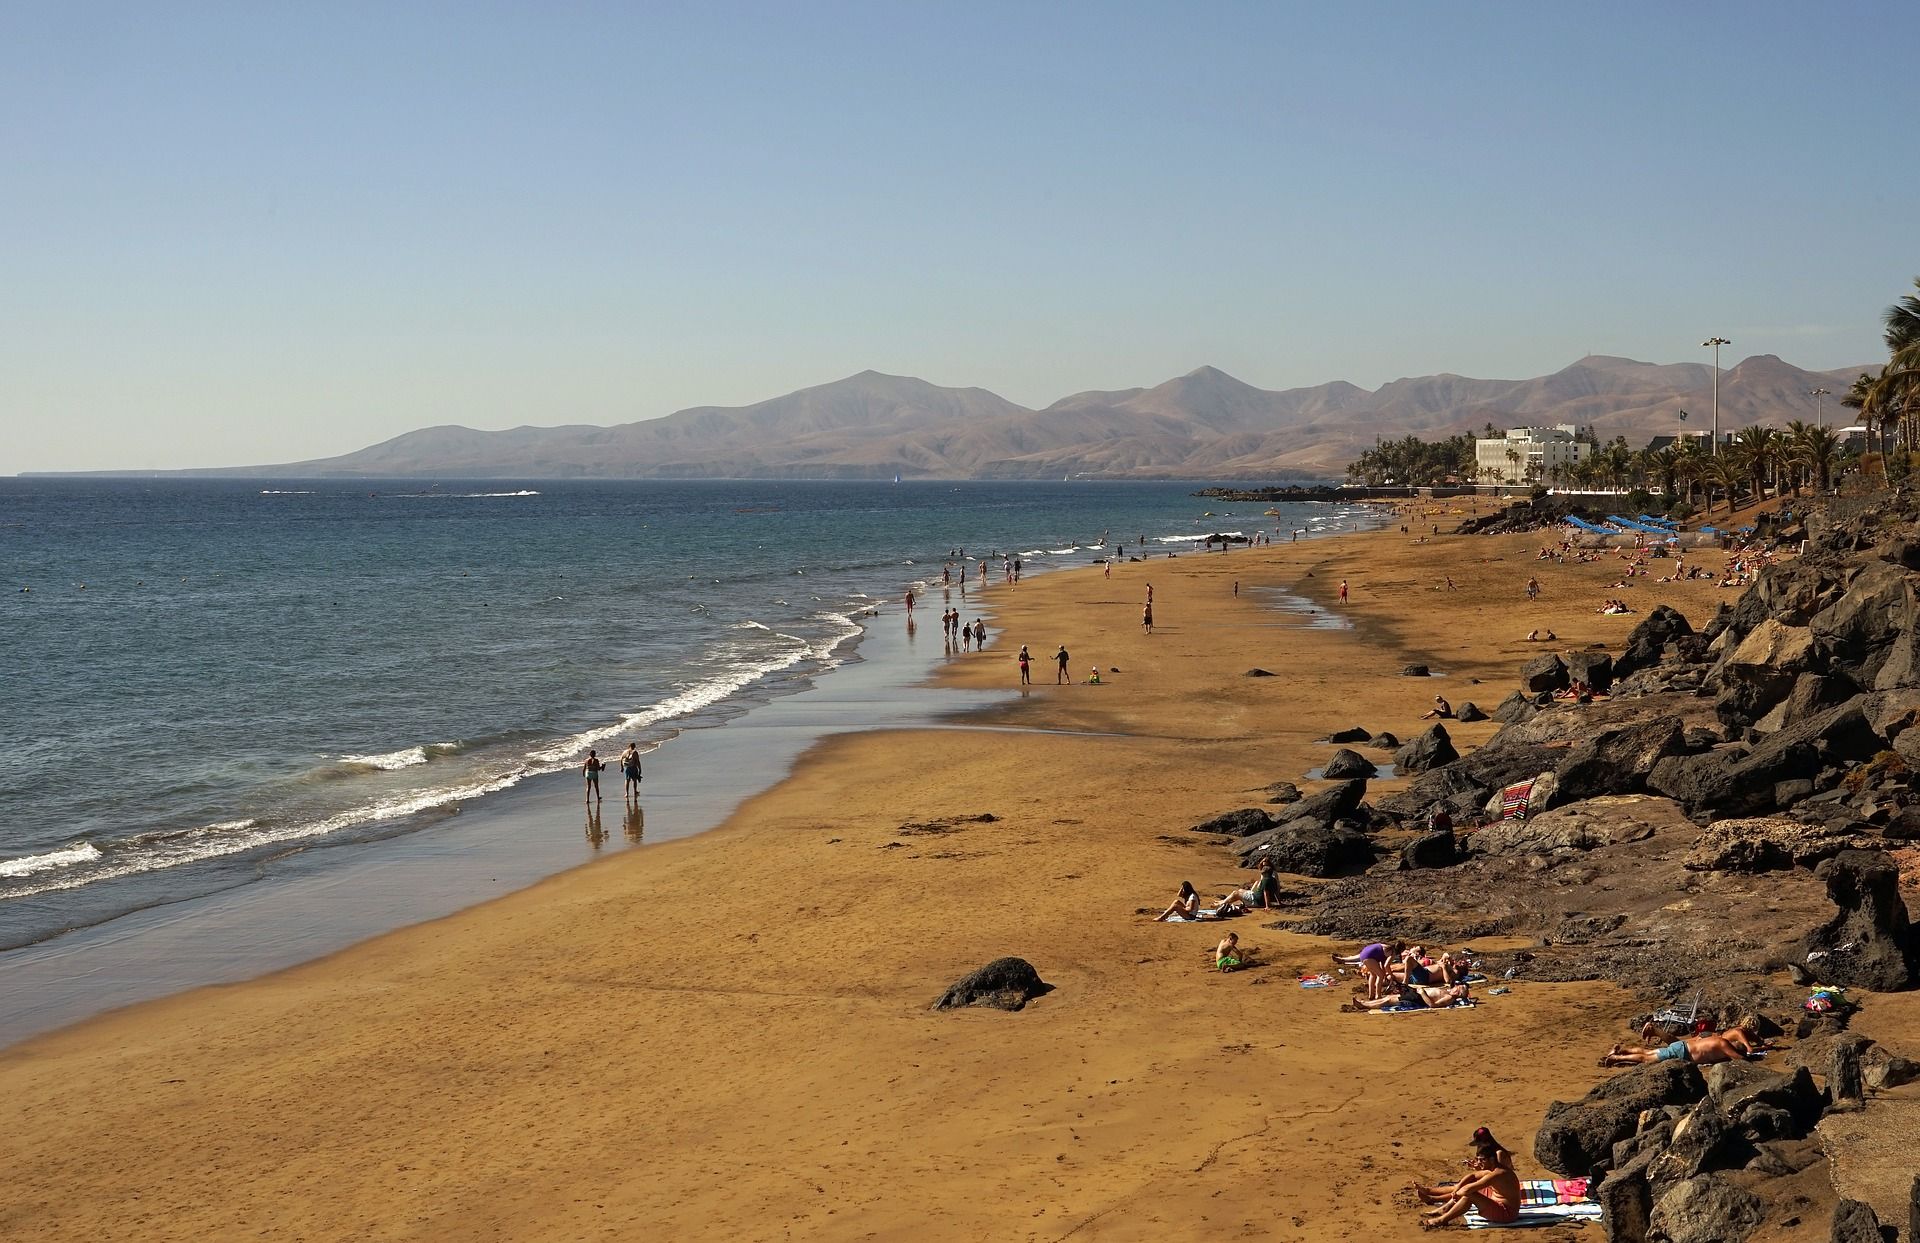 Lanzarote: vacanza in spiaggia in inverno